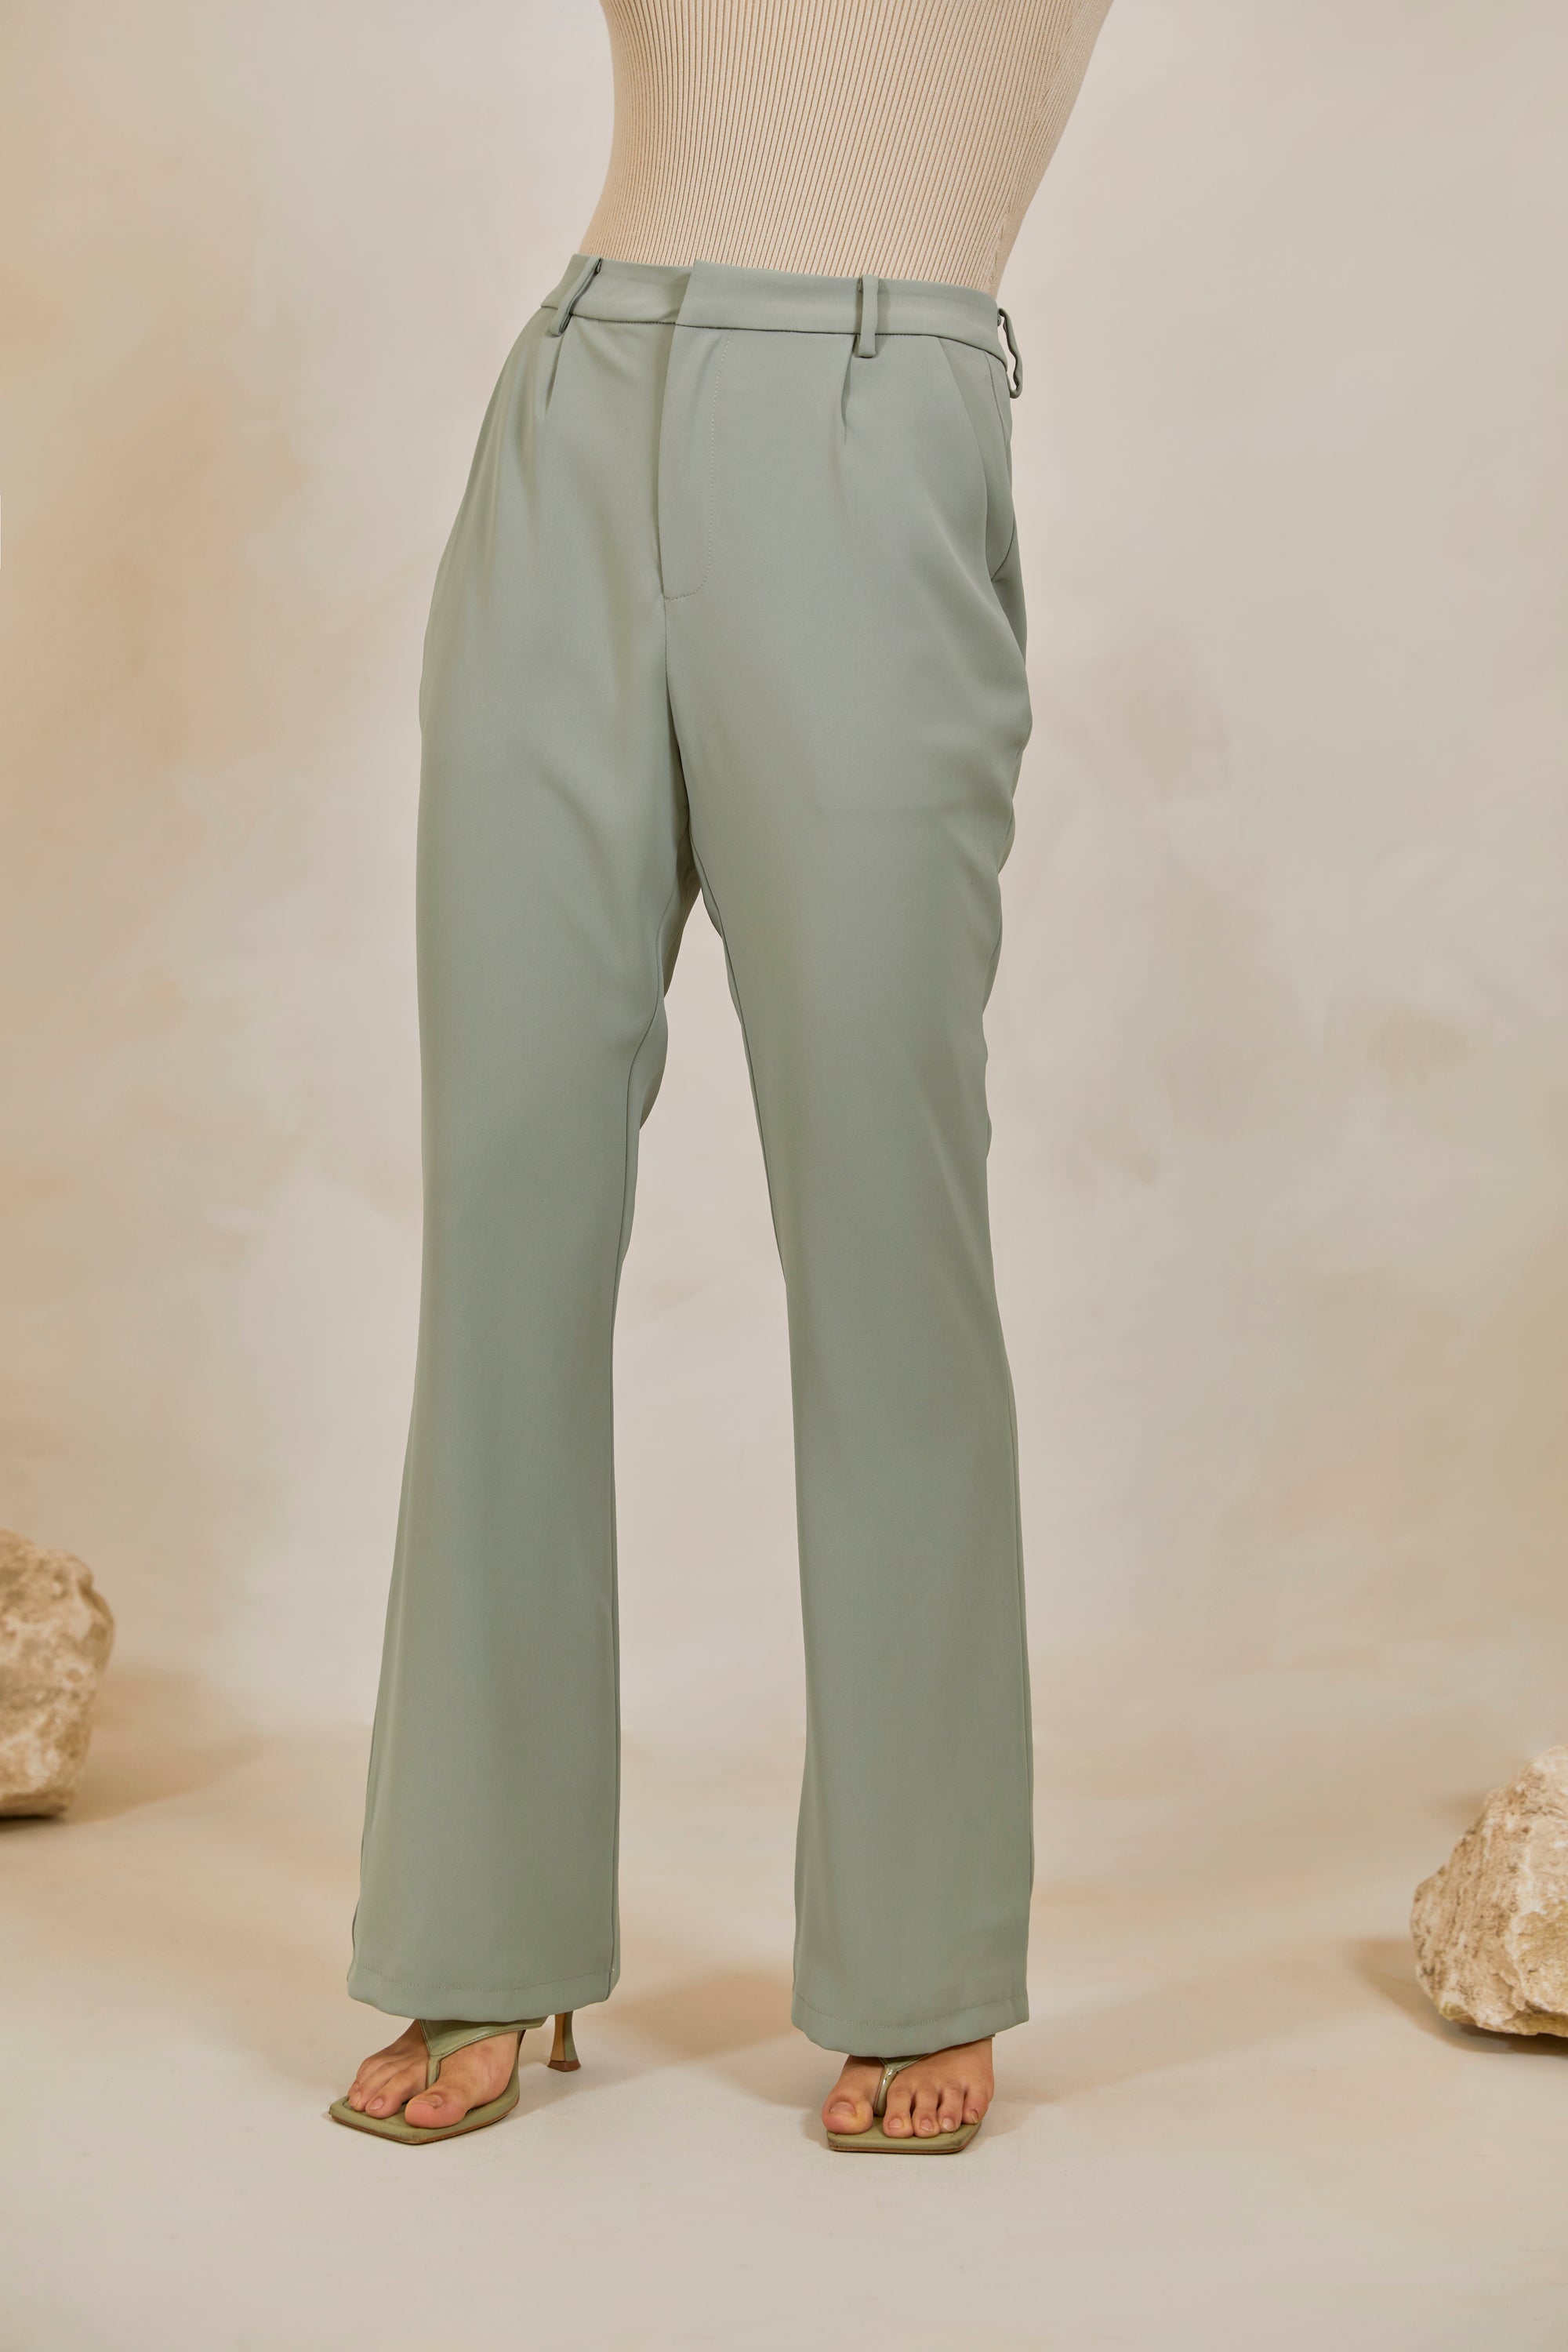 Olive Green Women's Pants for sale in Stillwater, Washington